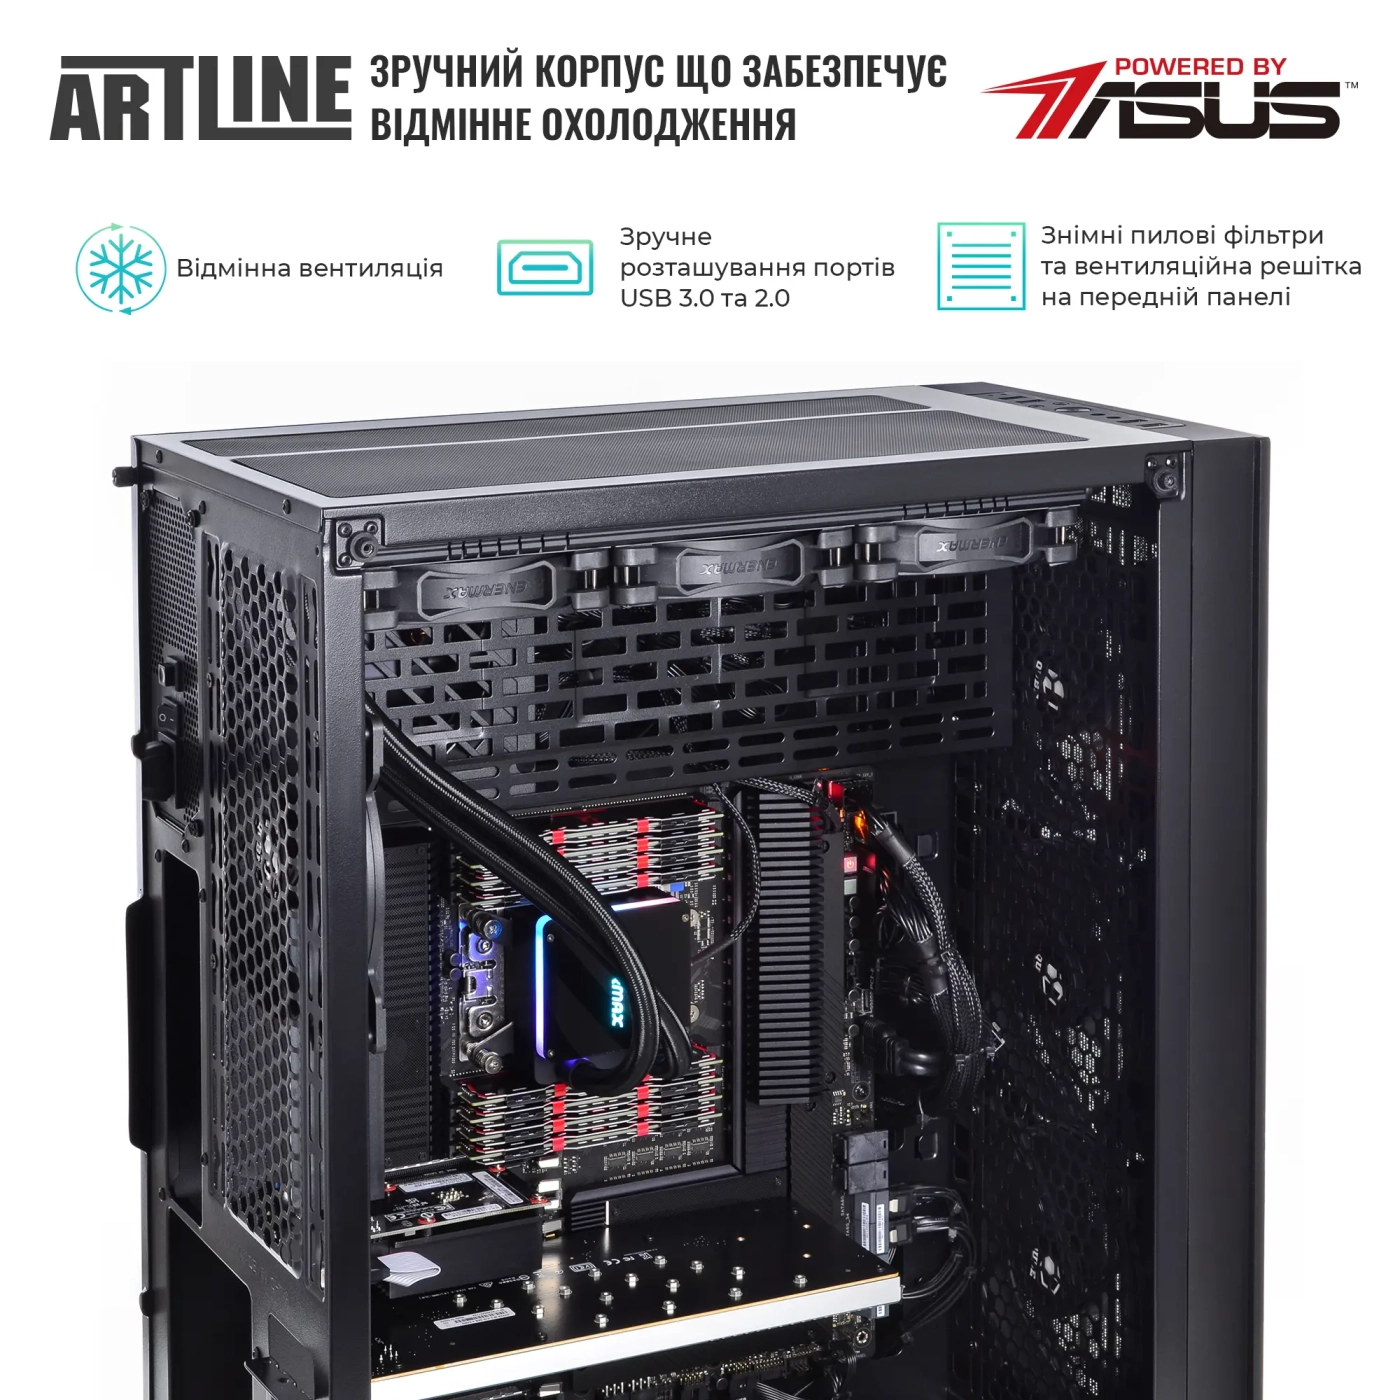 Купити Сервер ARTLINE Business T85v06 - фото 2